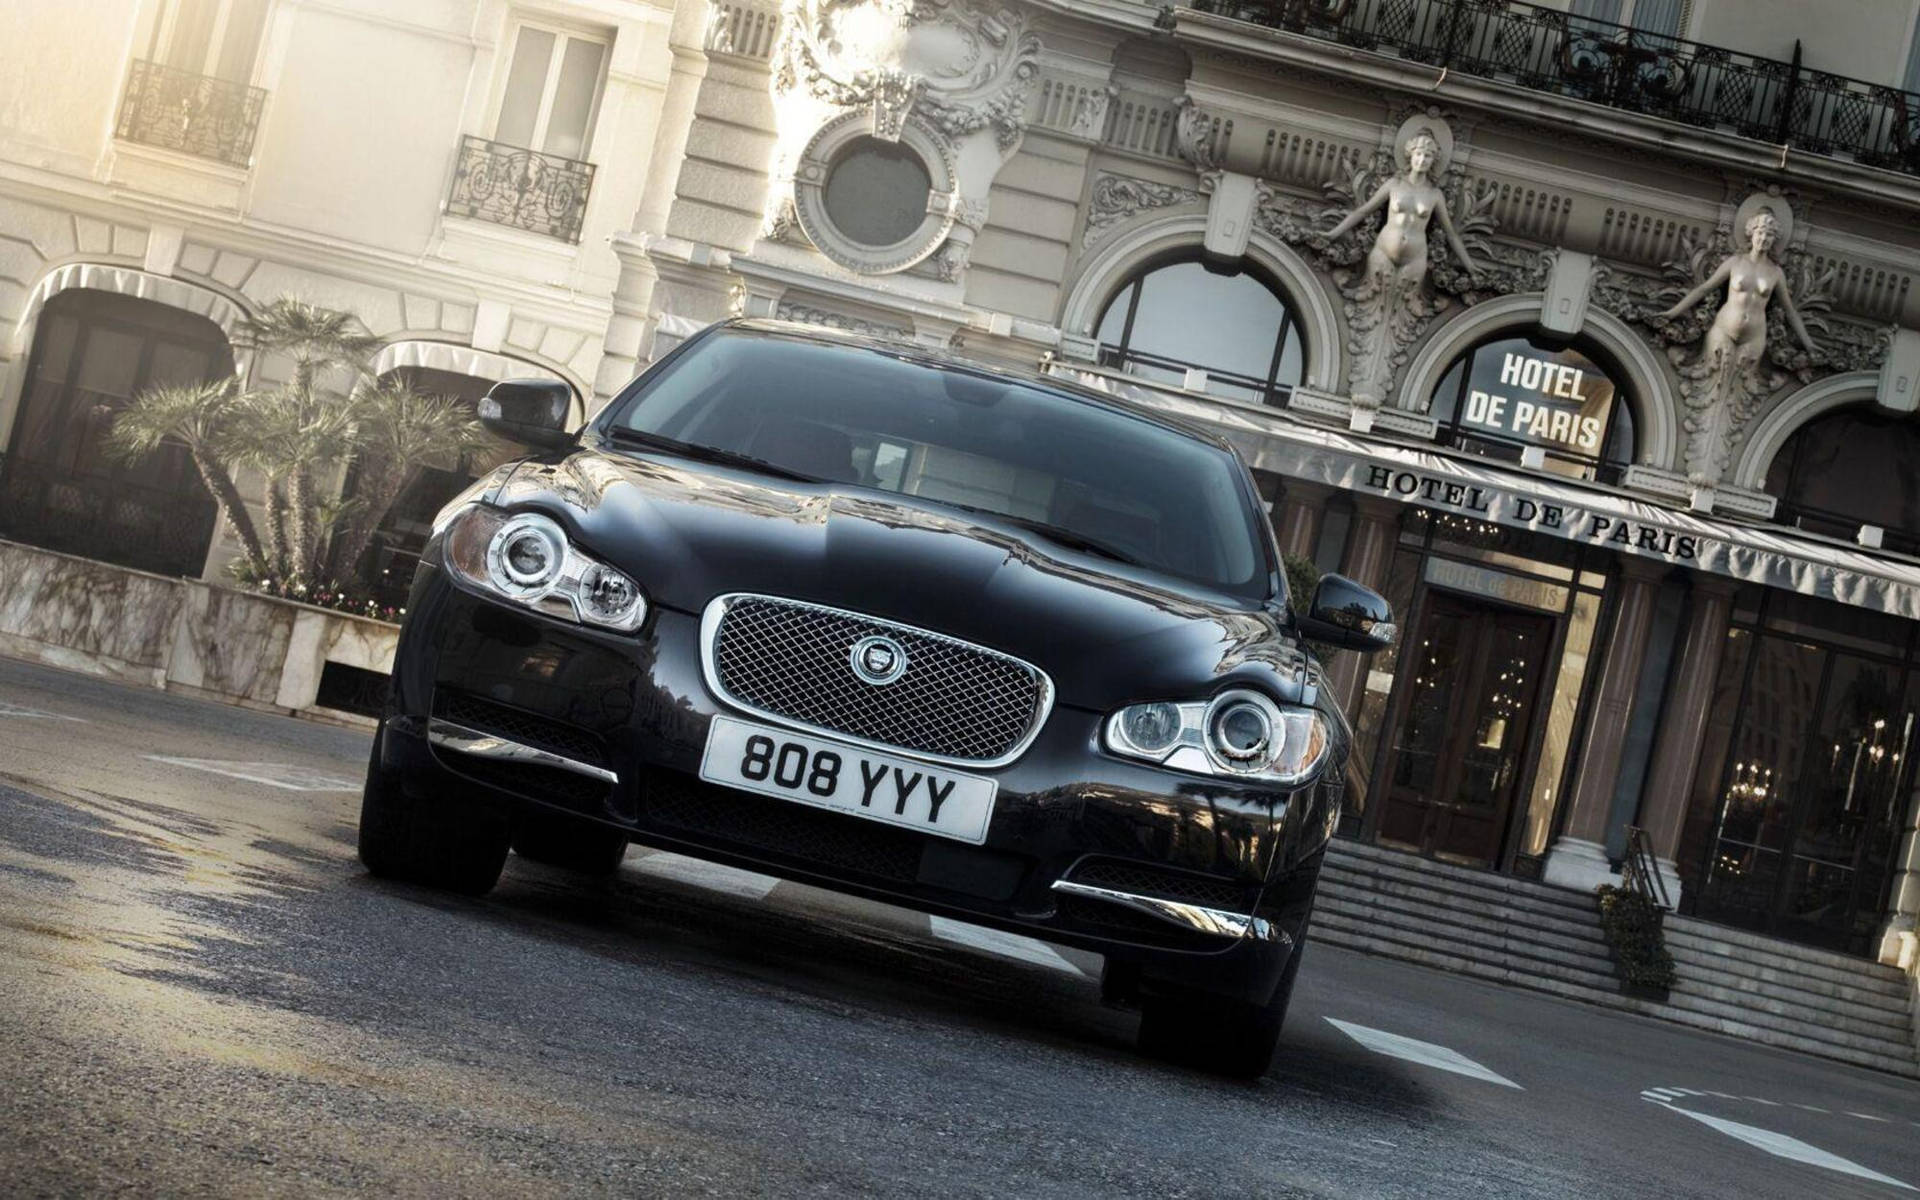 Luxury On Display: Jaguar Car At The Iconic Hotel De Paris Background